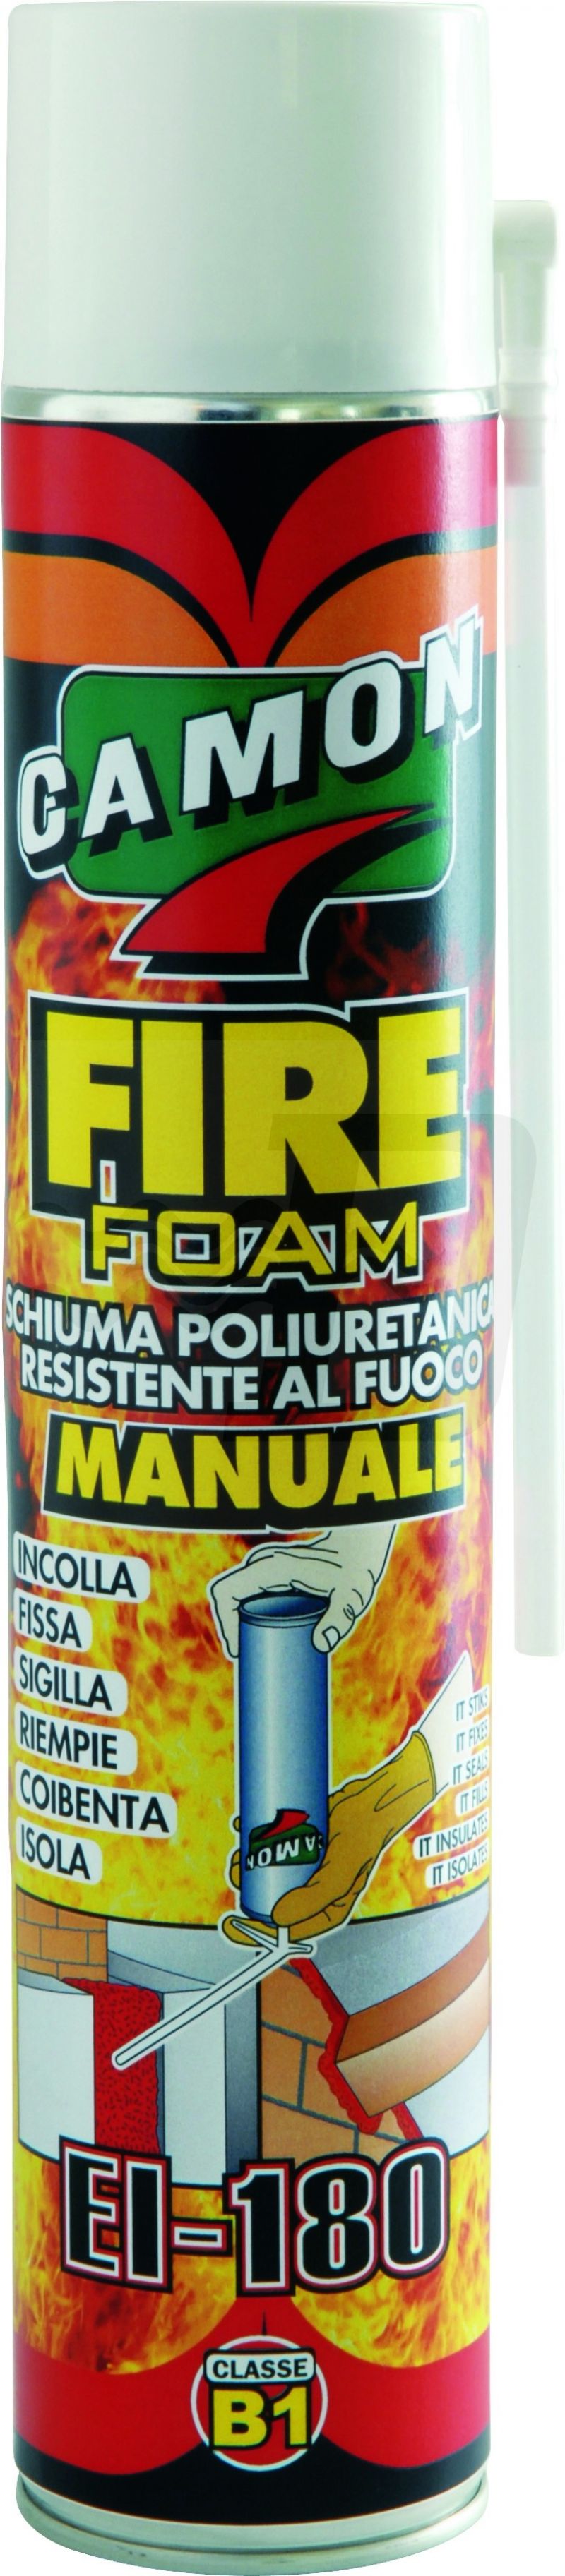 SCHIUMA POLIURETANICA RESISTENTE AL FUOCO MOD. FIRE FOAM 700 ml